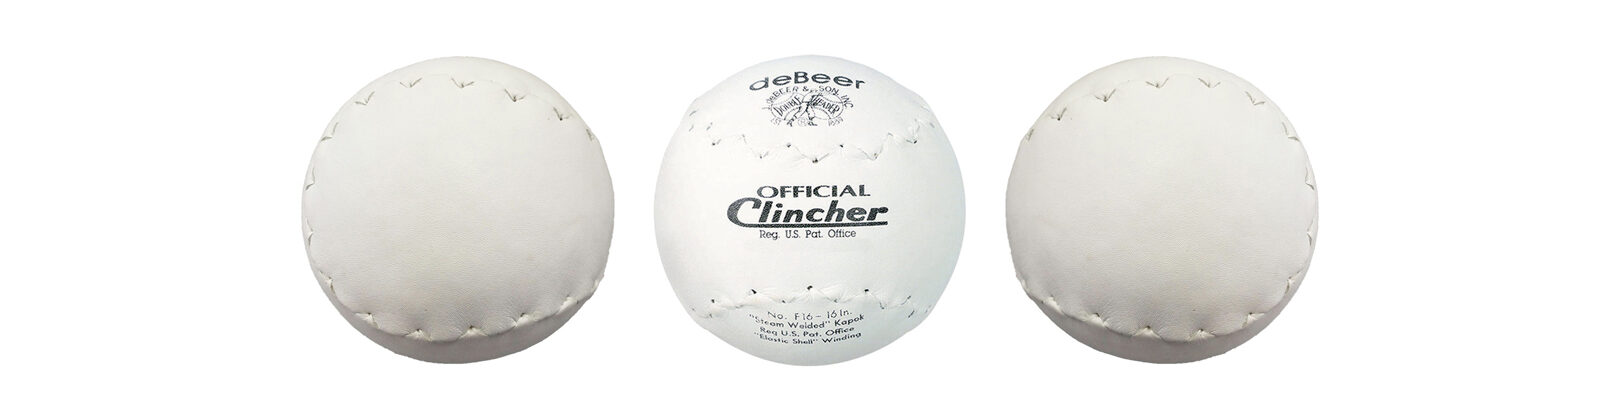 Custom 16" Rawlings deBeer Clincher Softball